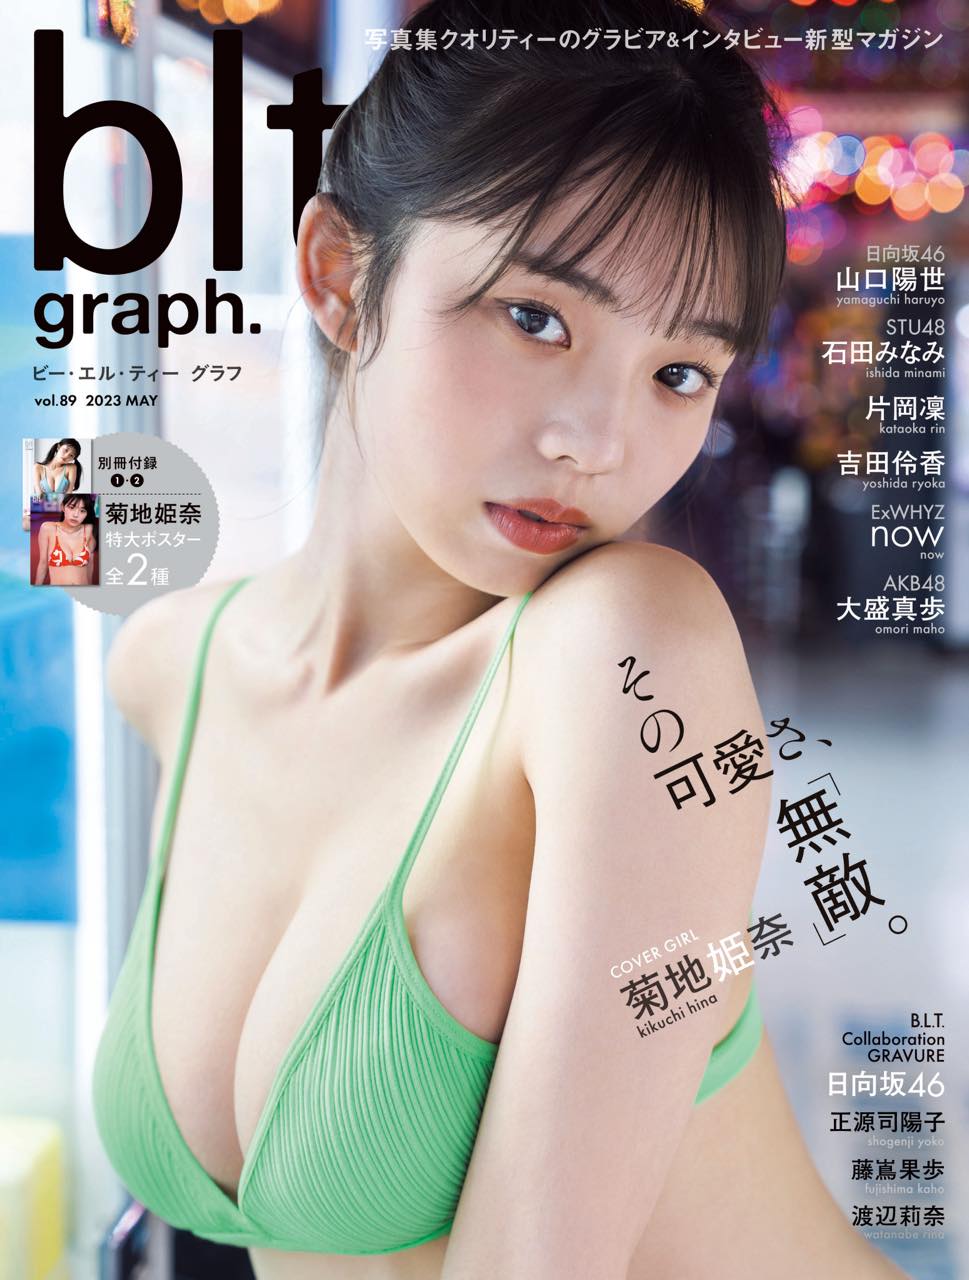 STU48 石田みなみ、AKB48 大盛真歩、グラビア掲載！「blt graph. vol.89」5/2発売！